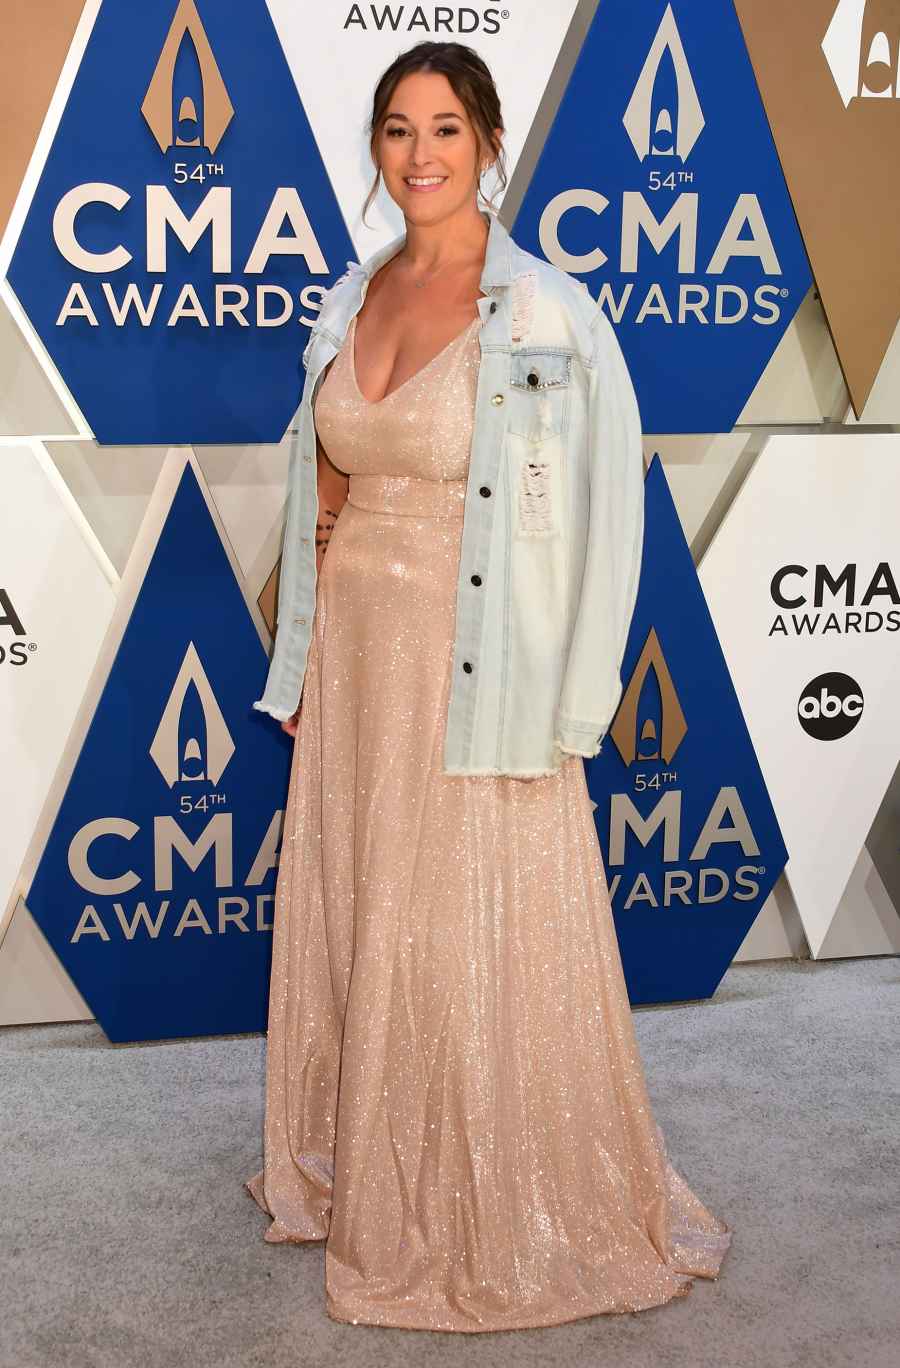 CMA Awards 2020 Red Carpet Arrivals - Tara Diffie